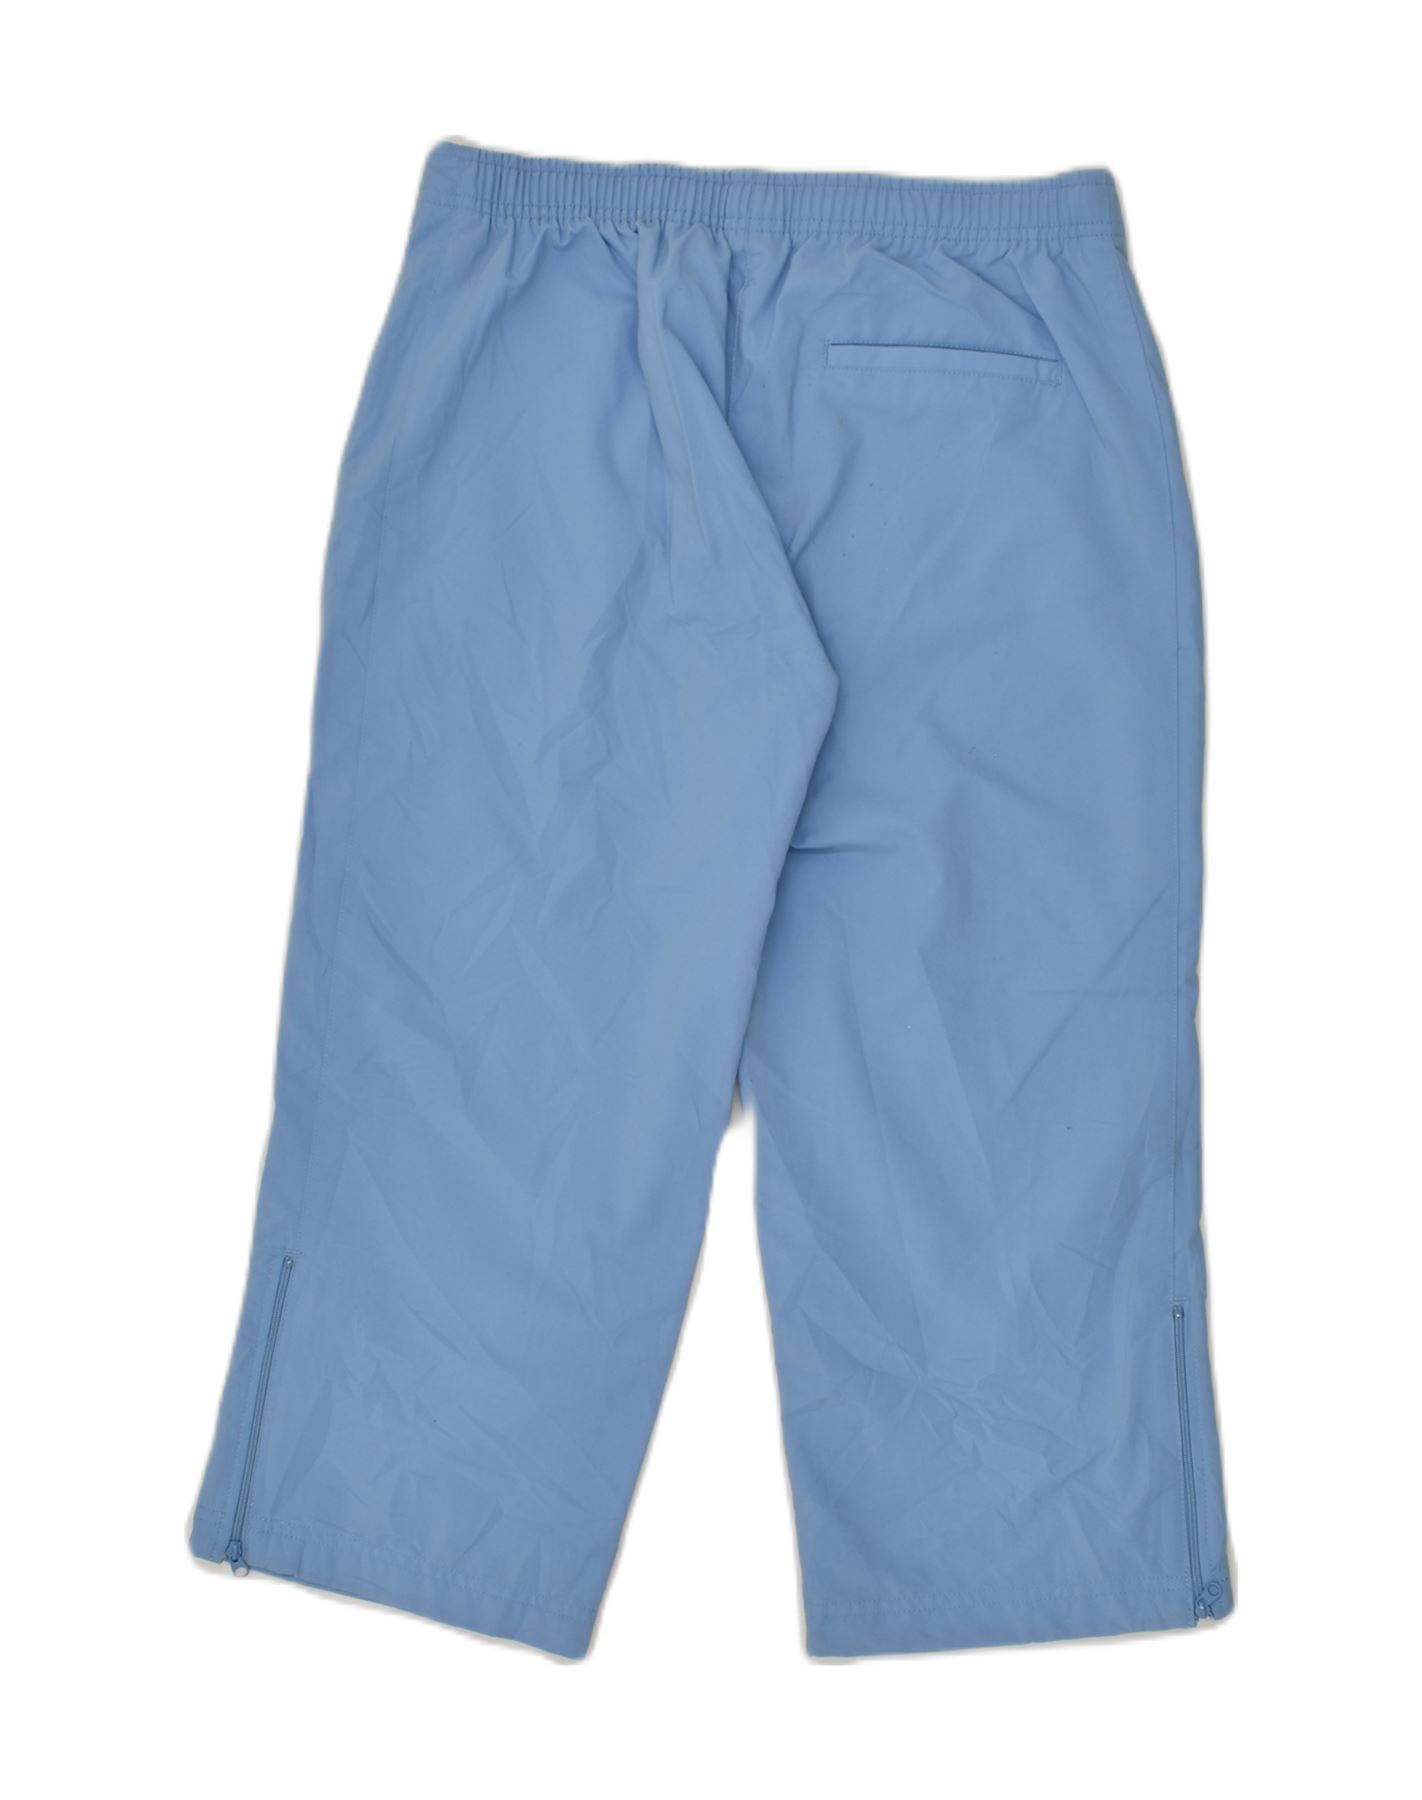 NIKE Womens Capri Tracksuit Trousers UK 8-10 Small Blue Polyester